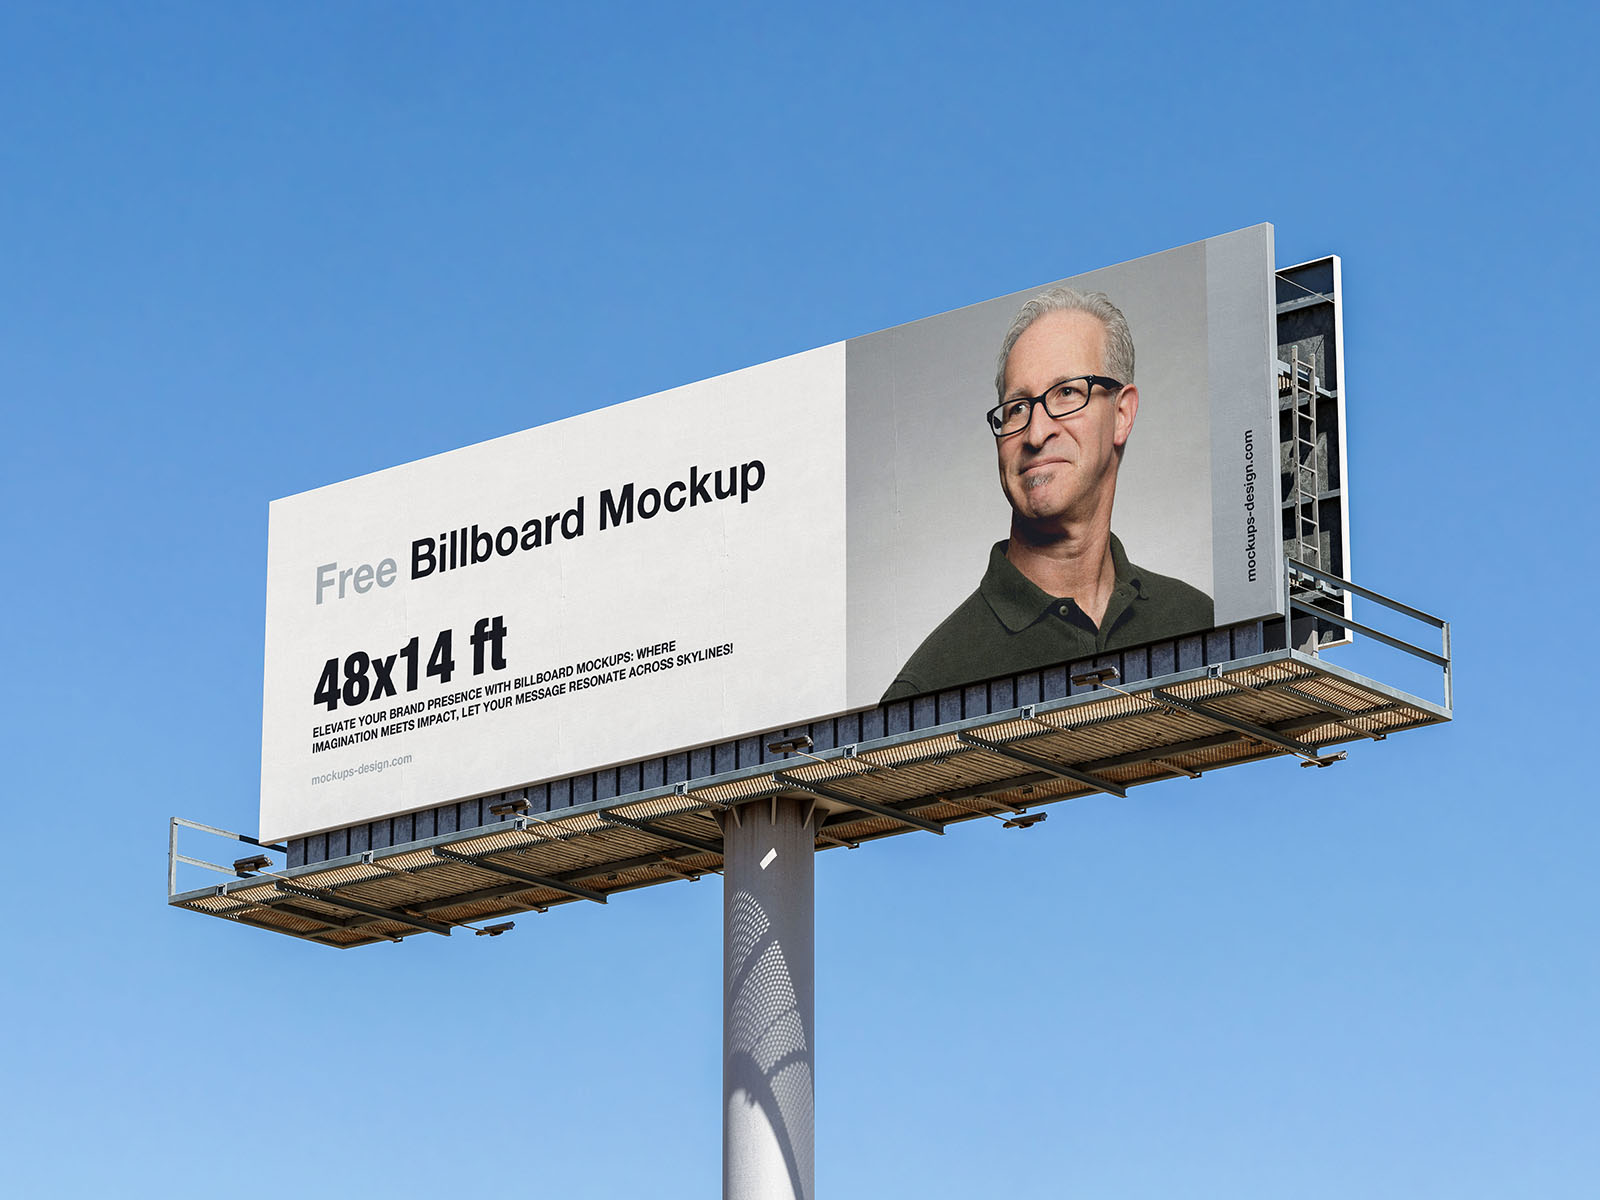 Wide billboard mockup / 48x14 ft